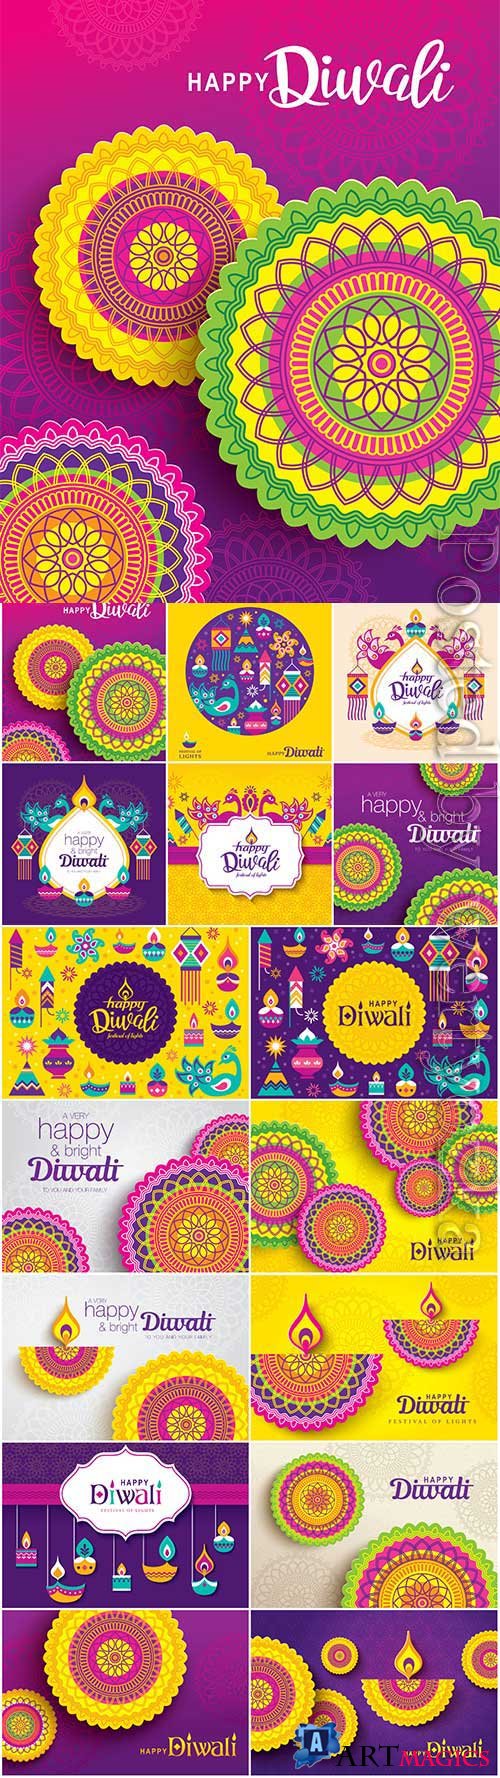 Diwali color illustration in vector